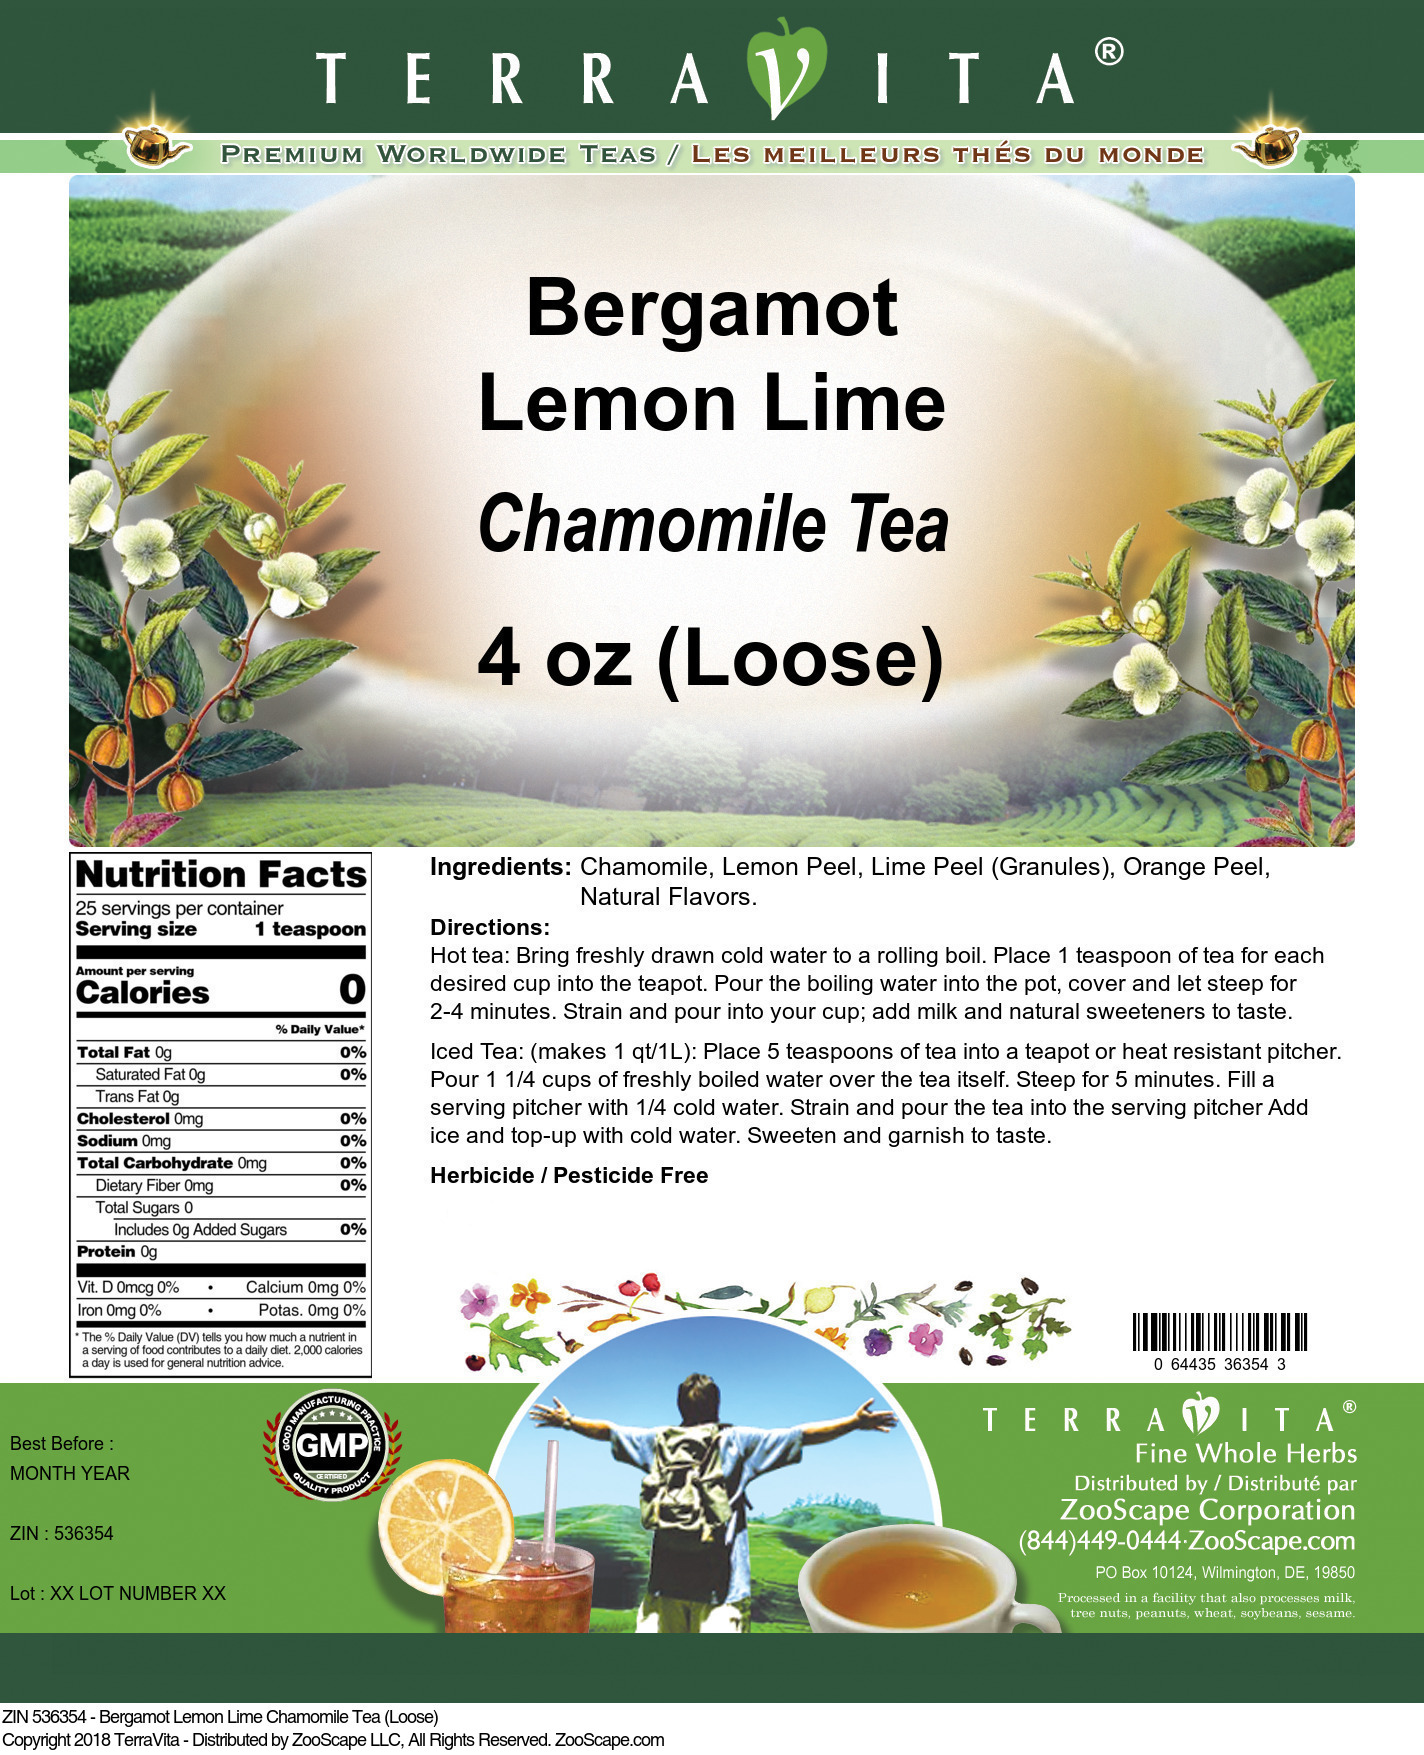 Bergamot Lemon Lime Chamomile Tea (Loose) - Label